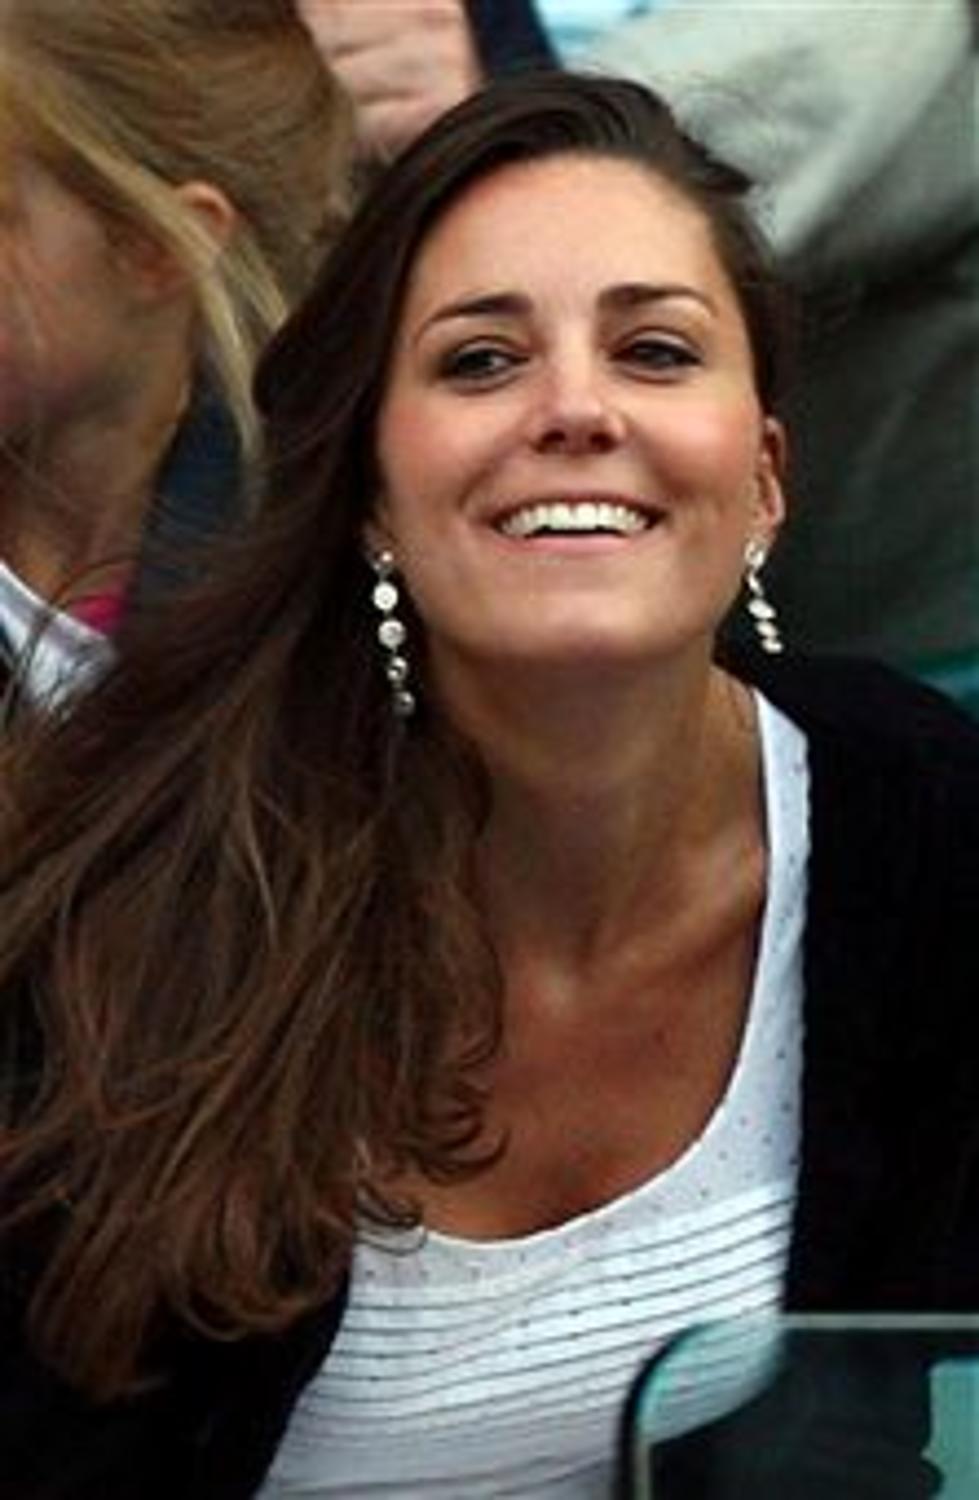 Kate Middleton’s Name A “Royal Brand”